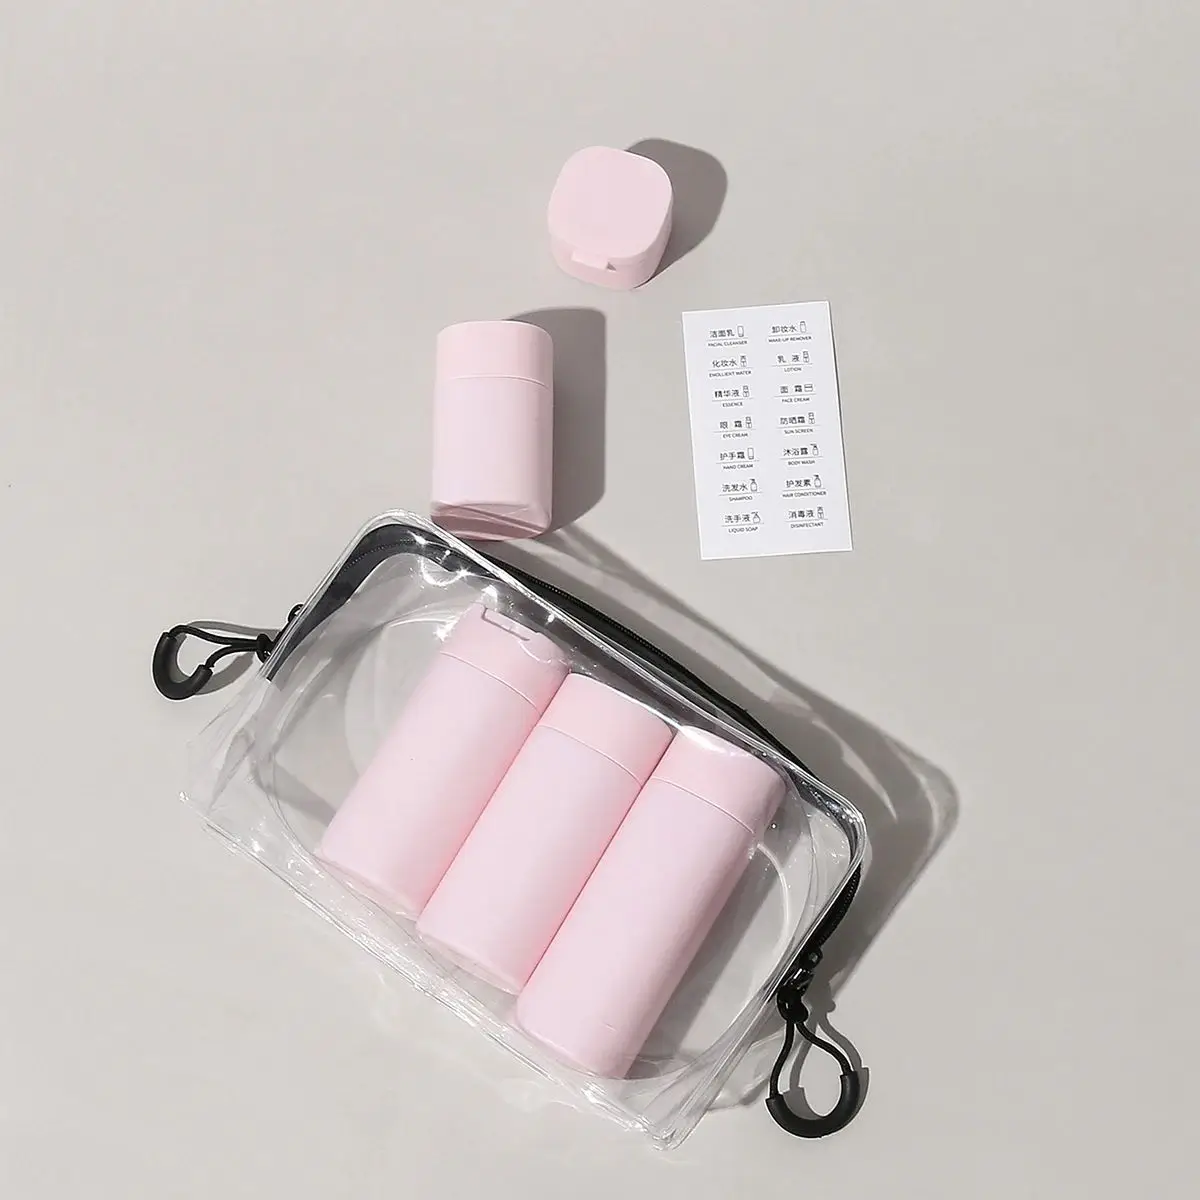 5pcs Multiple Colors Portable Soft Touch Cream Travel Dispenser Bottles Set for Lotion Cleanser Shampoo